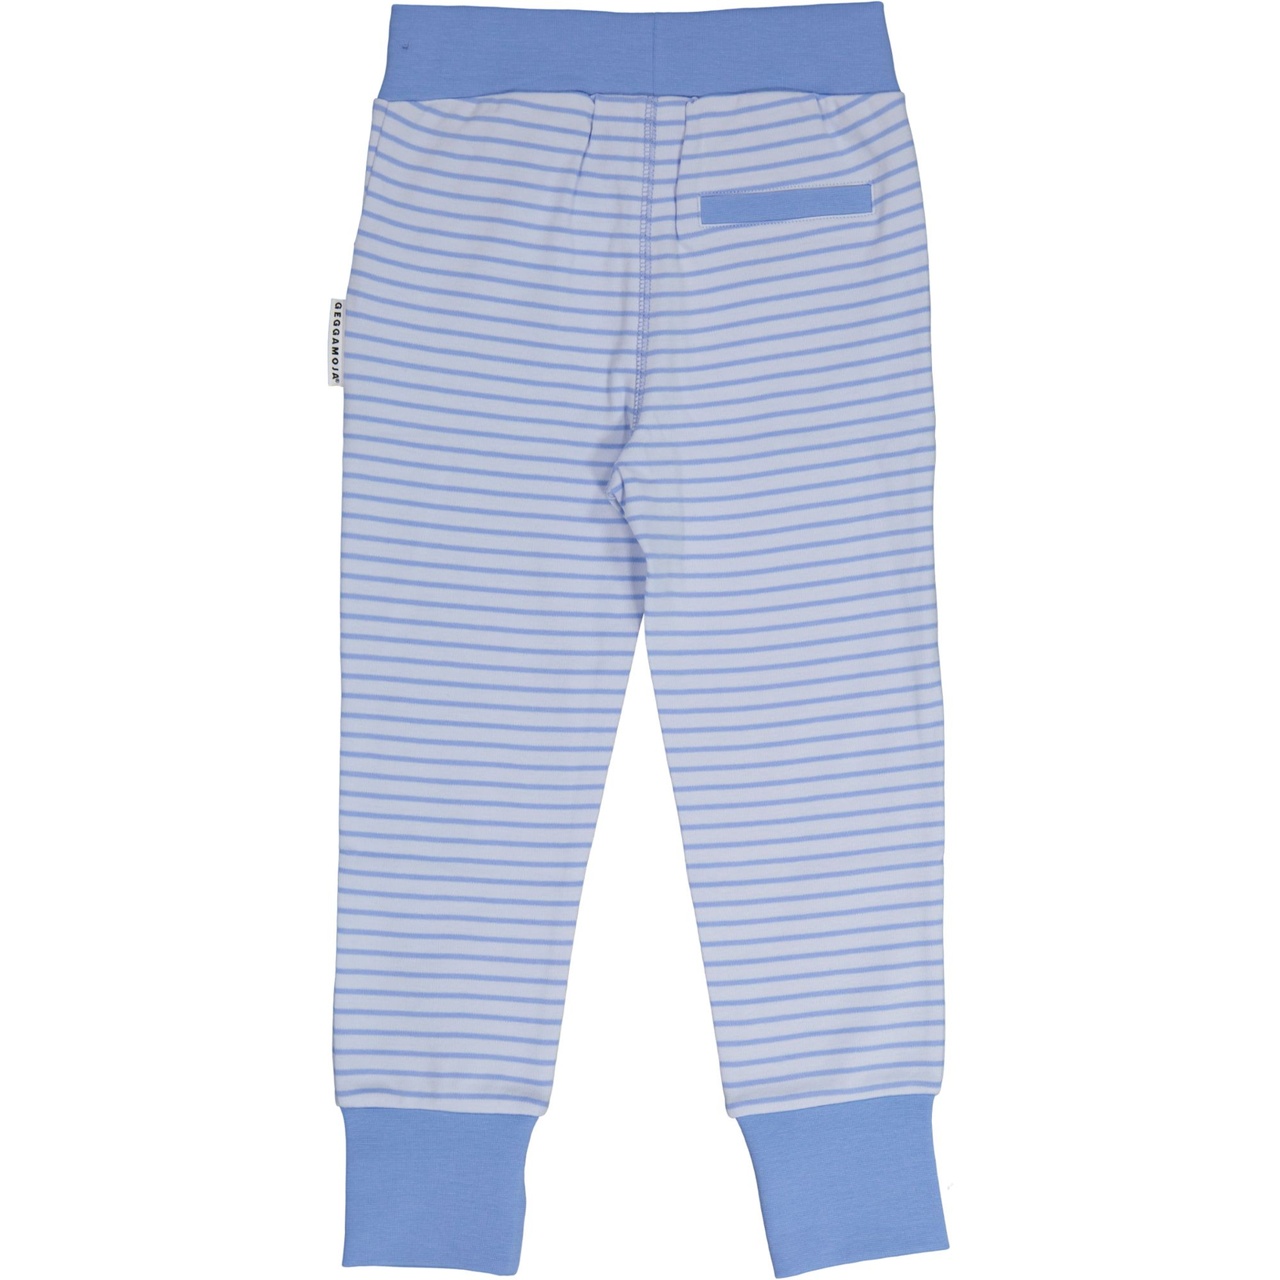 Long pants Light blue/blue  110/116